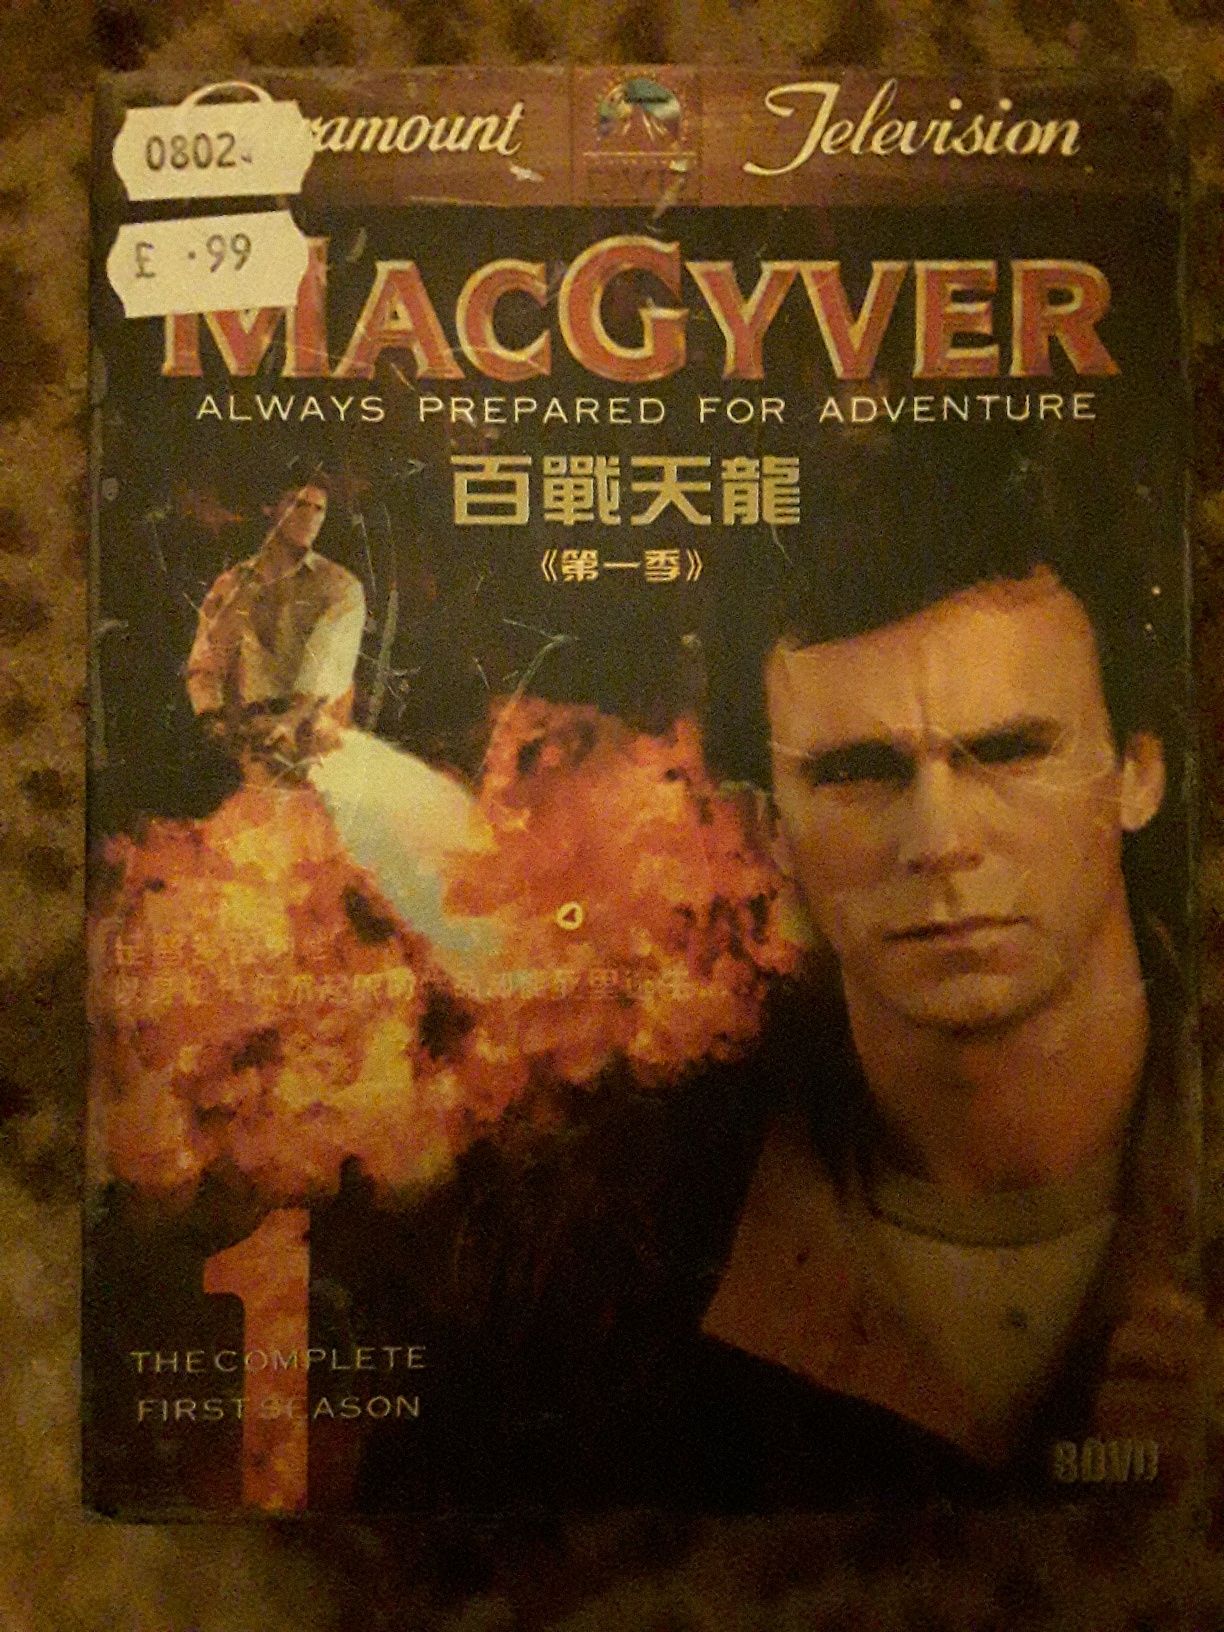 MacGyver dvd sezon 1